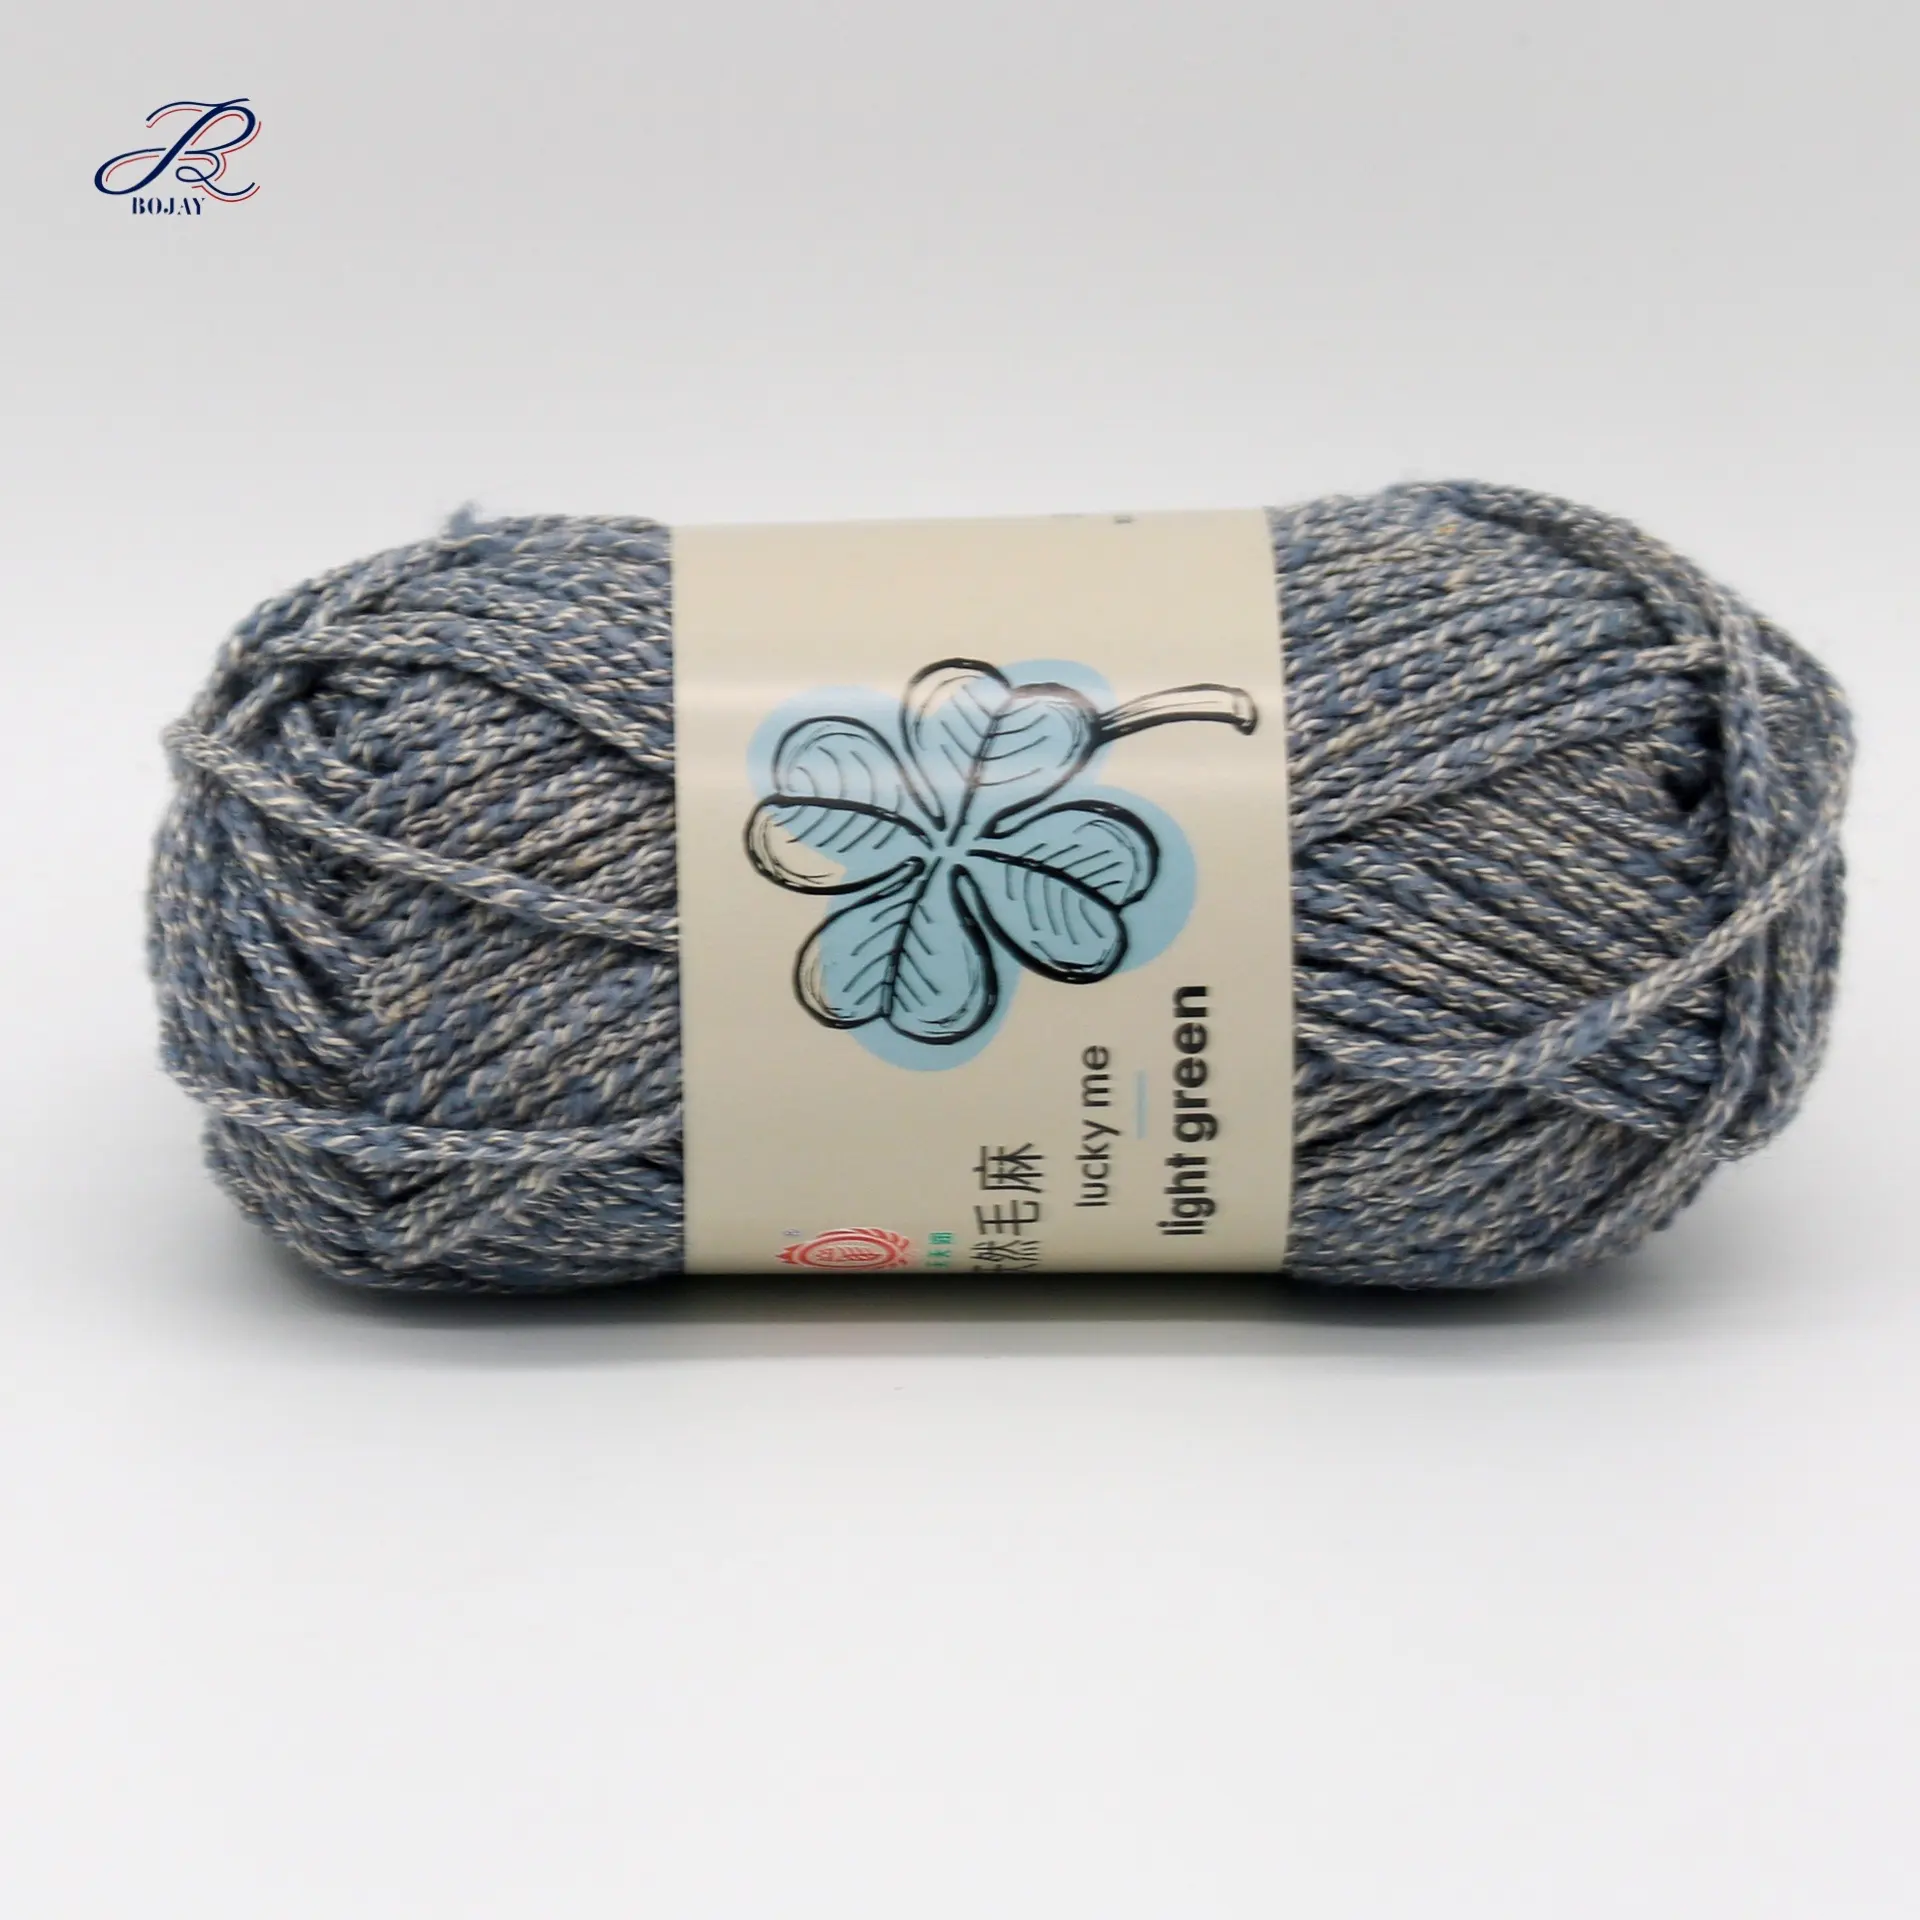 Bojay New Crochet Ribbon Tube Yarn, big loop yarn for Fancy Knitting, 58% Wool with 42% Ramie Blended Hand Knitting Yarn